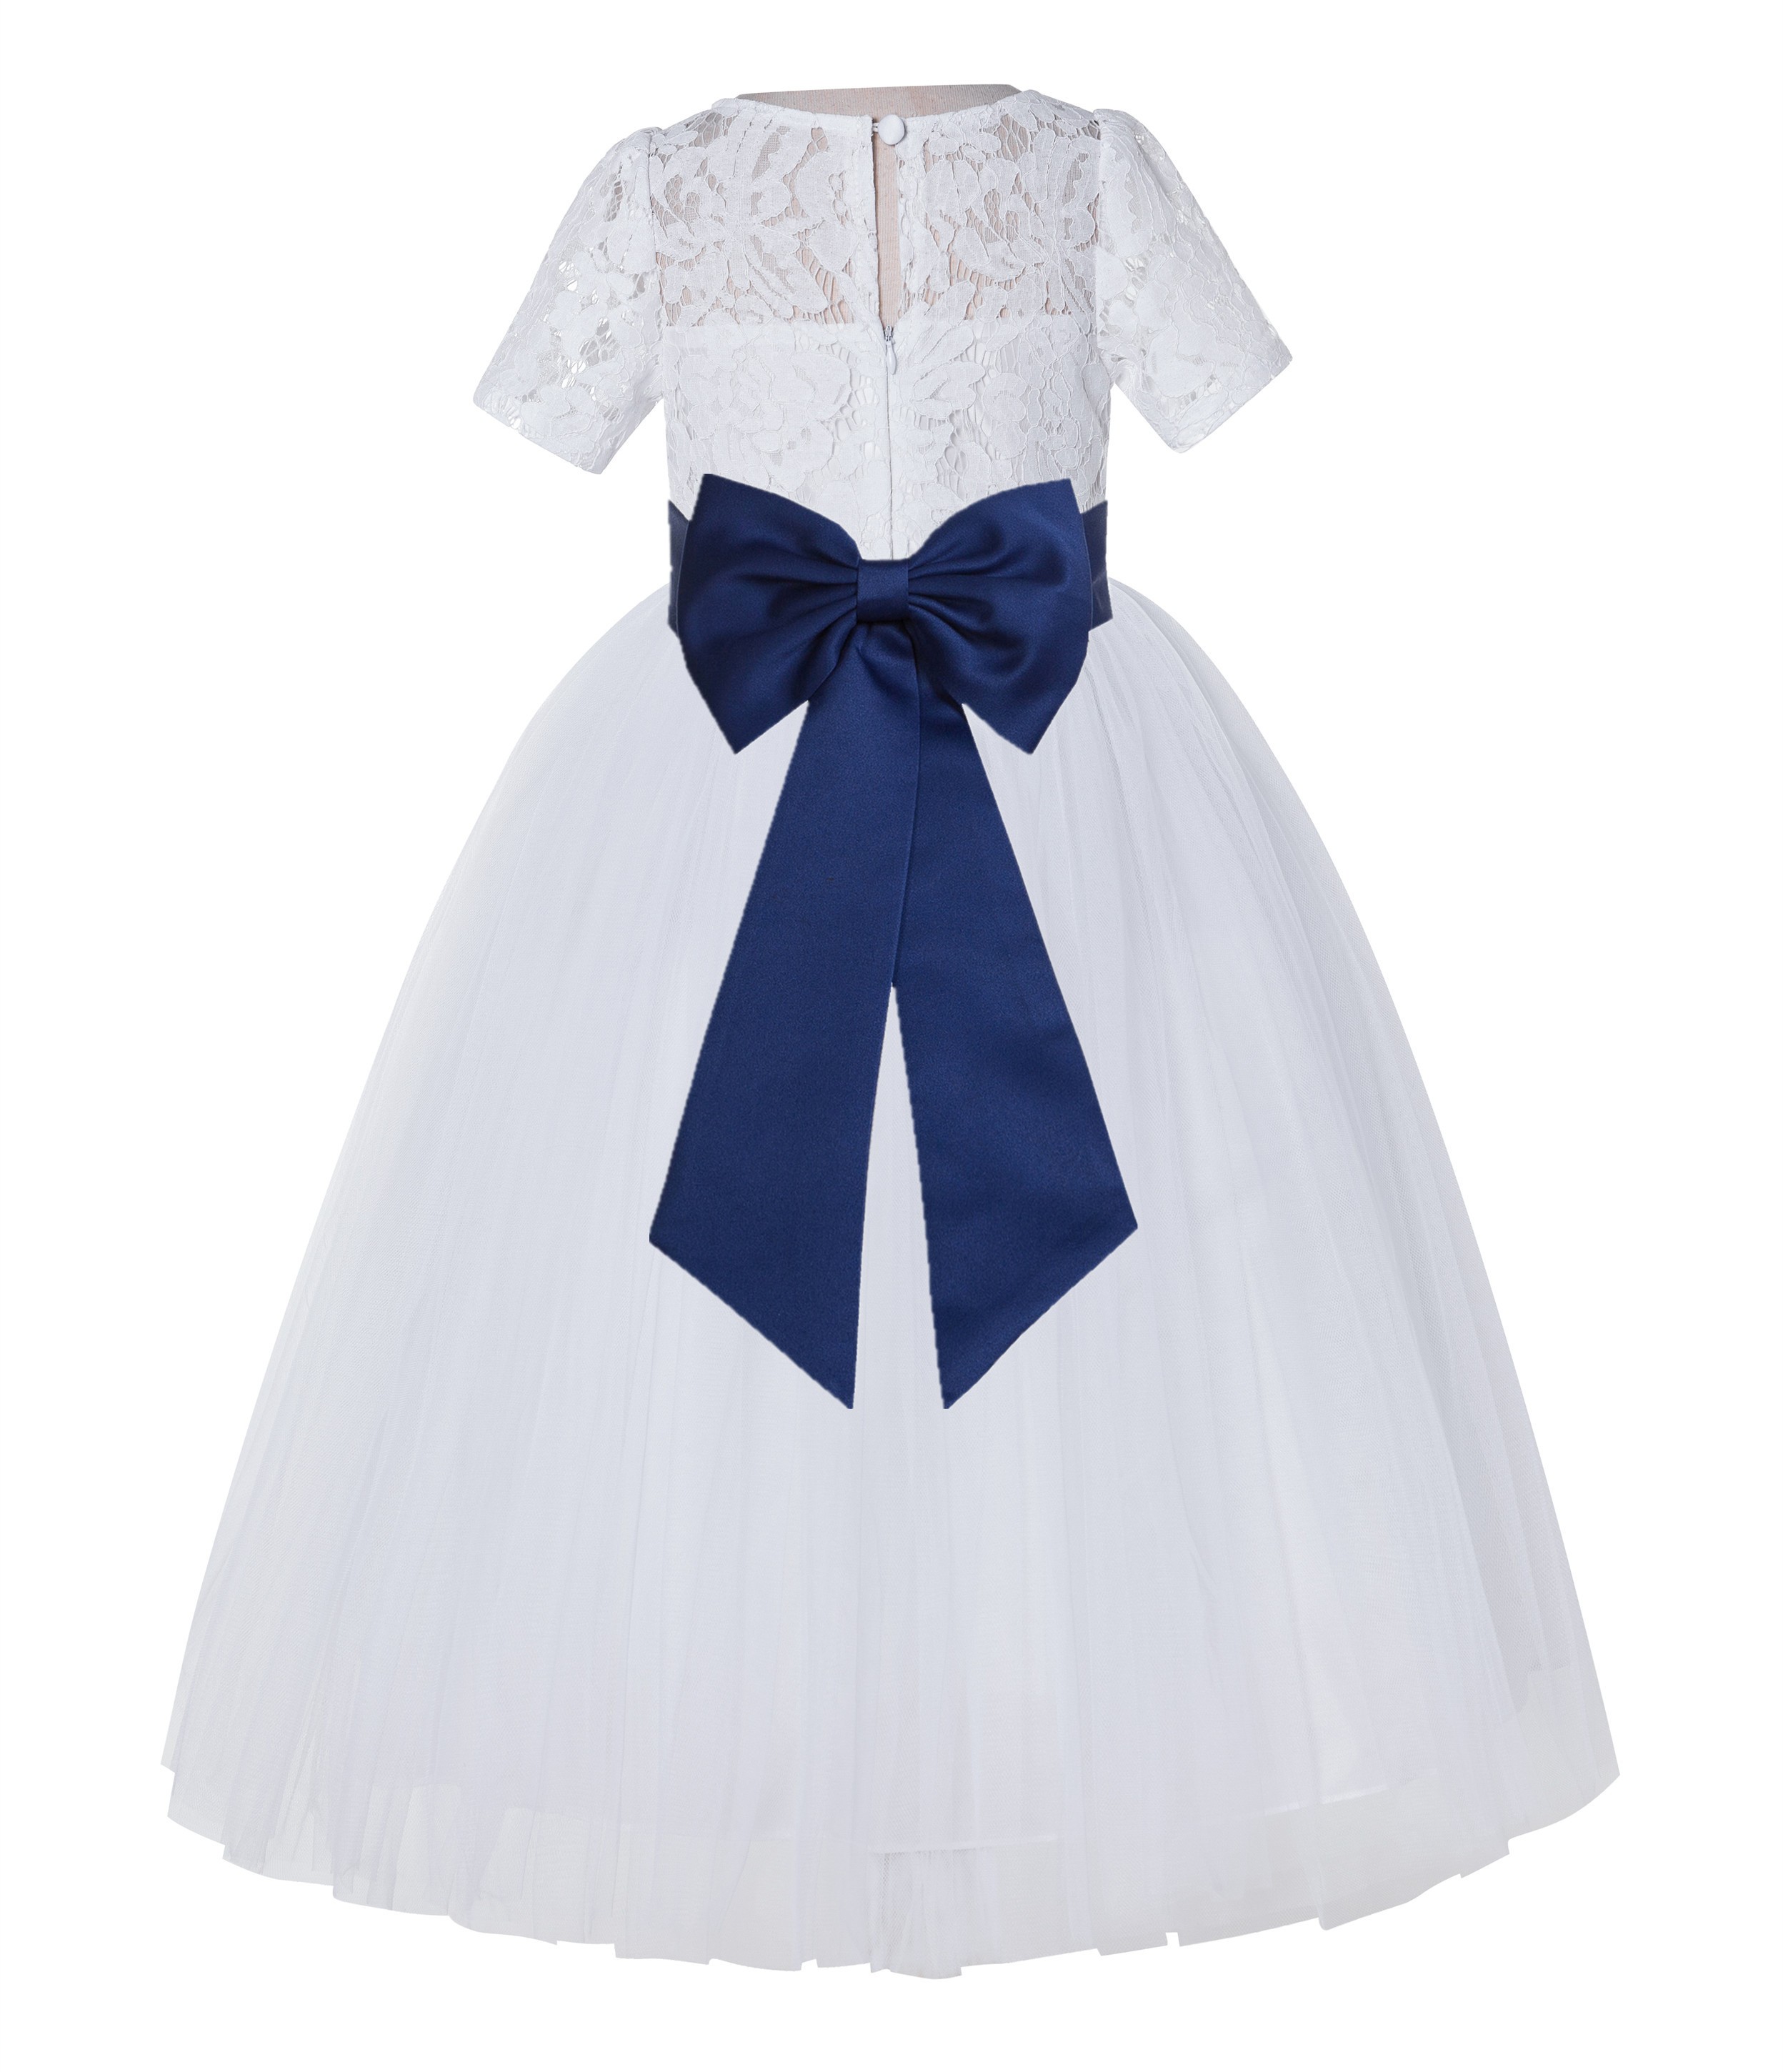 White / Navy Blue Floral Lace Flower Girl Dress Vintage Dress LG2